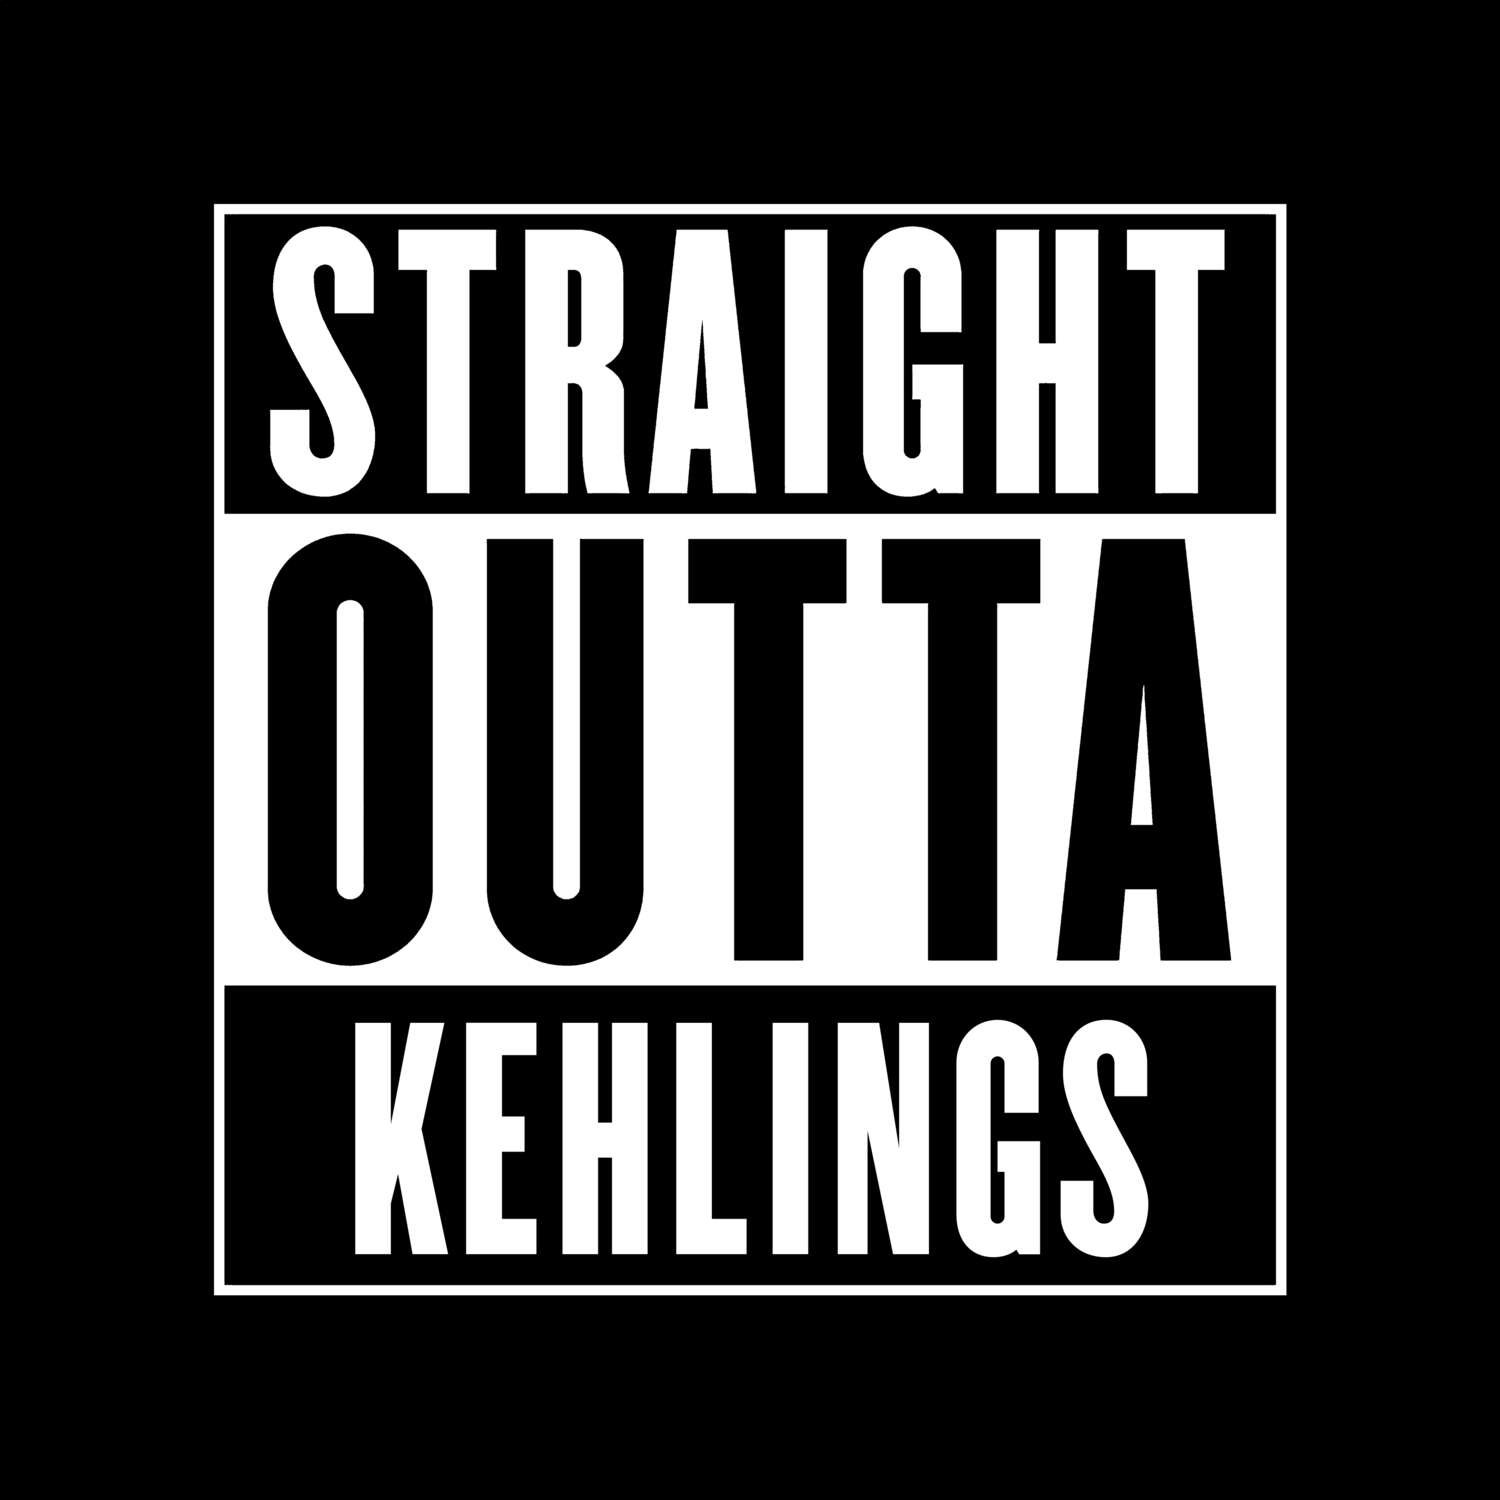 Kehlings T-Shirt »Straight Outta«